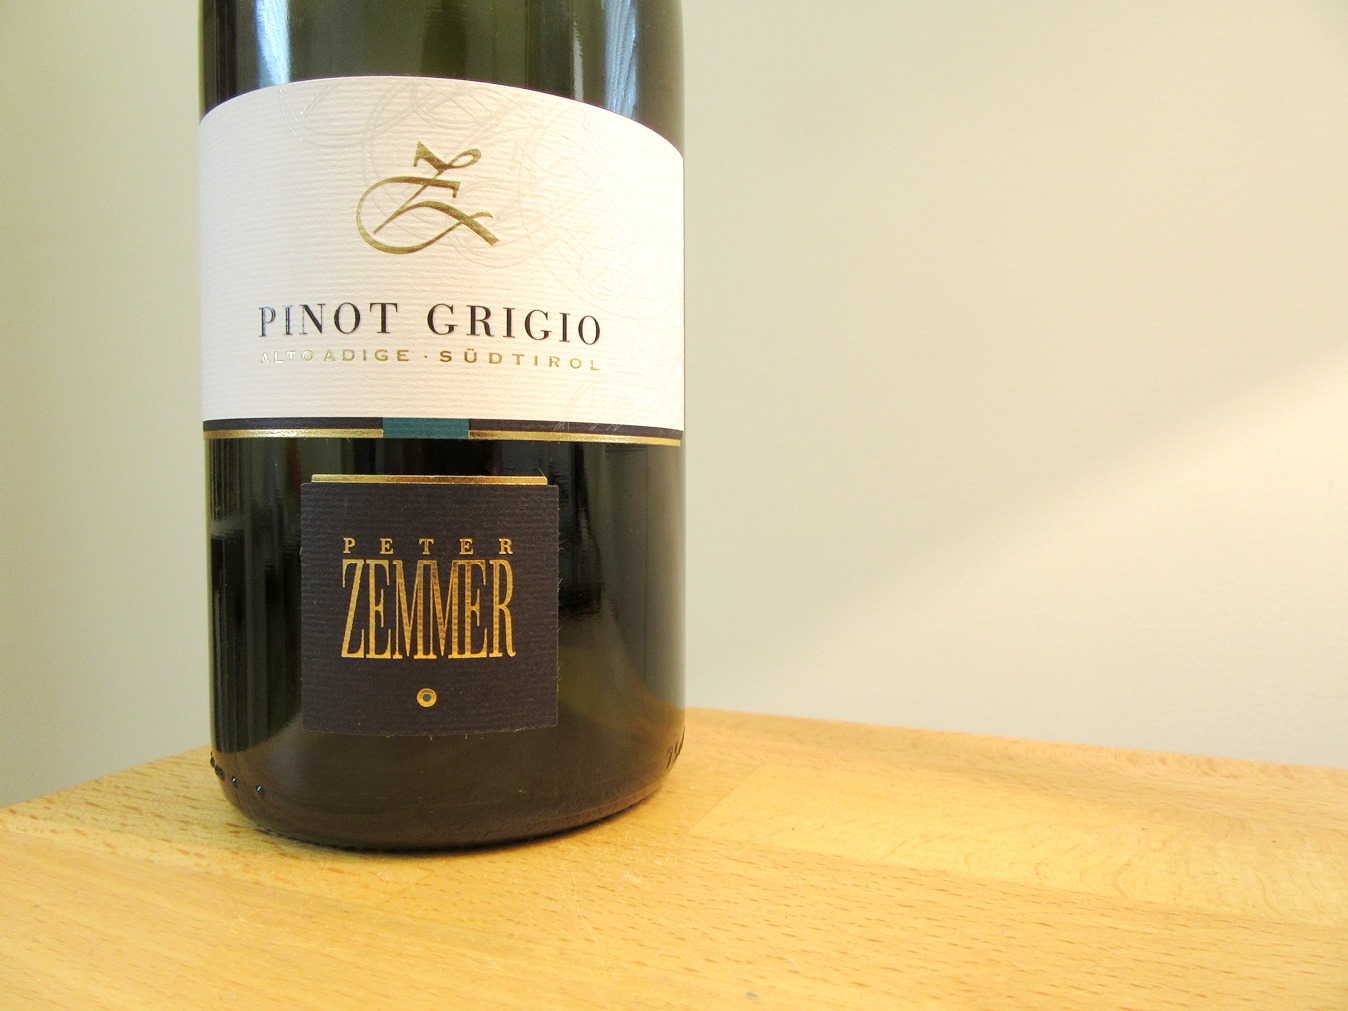 Peter Zemmer, Pinot Grigio 2015, Süditrol, Alto Adige, Italy, Wine Casual